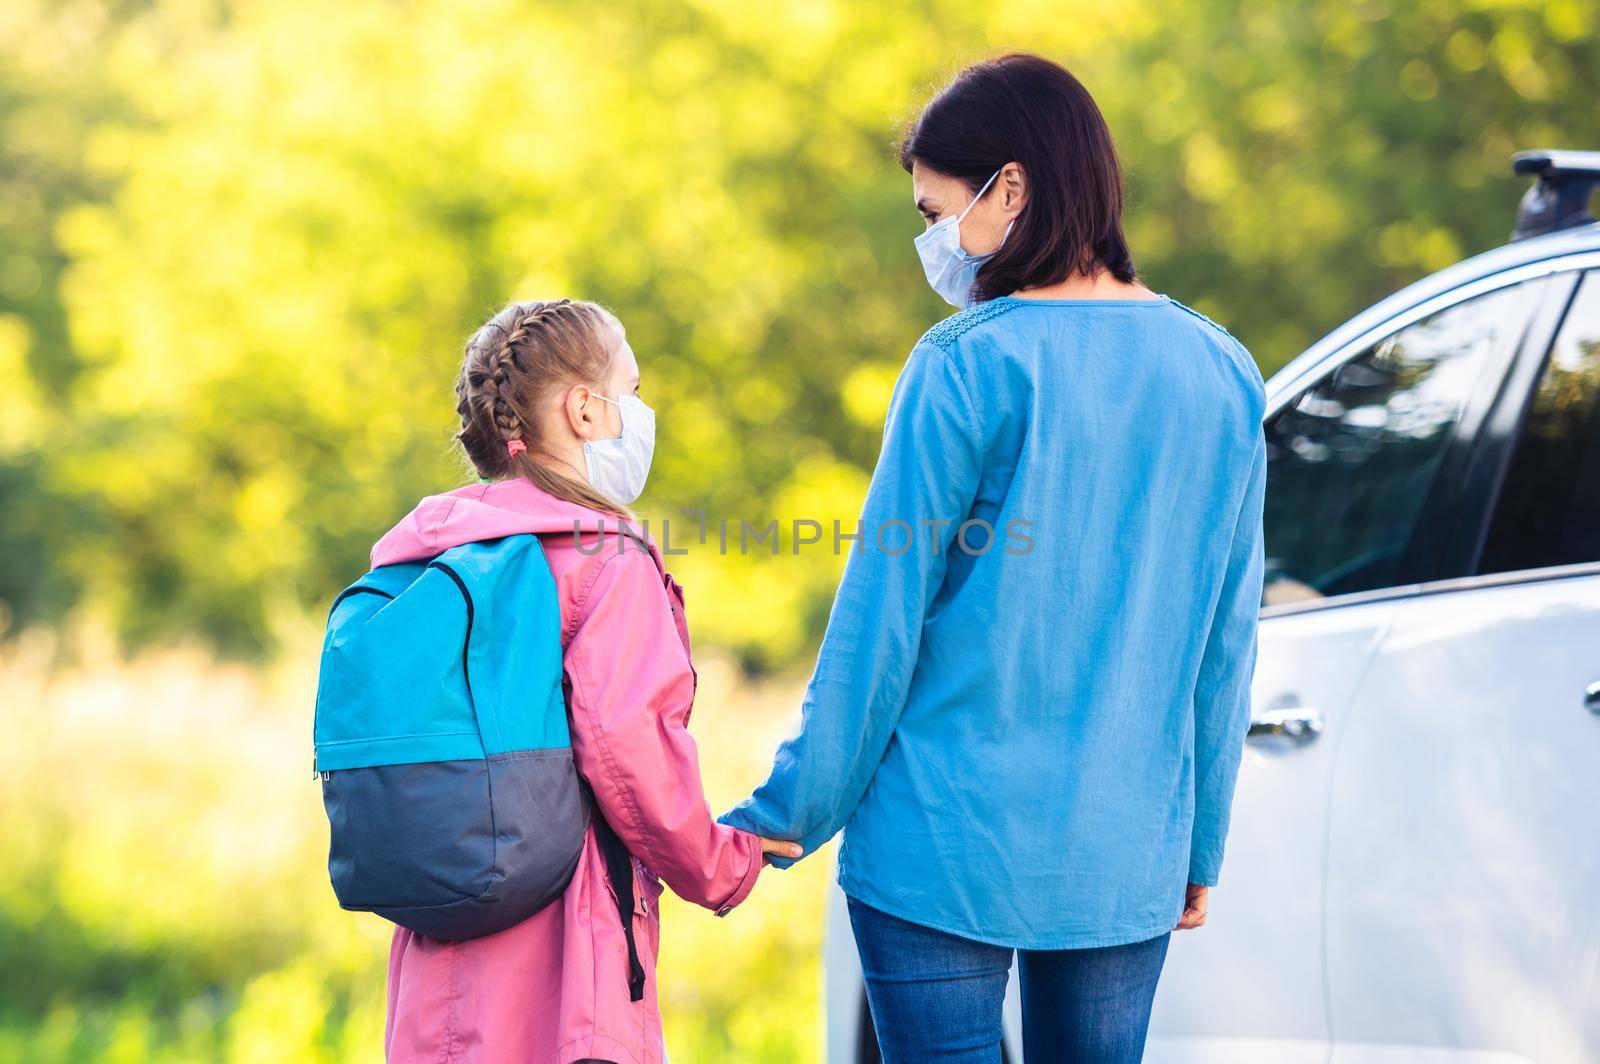 Mother meeting daughter after school during pandemic by GekaSkr